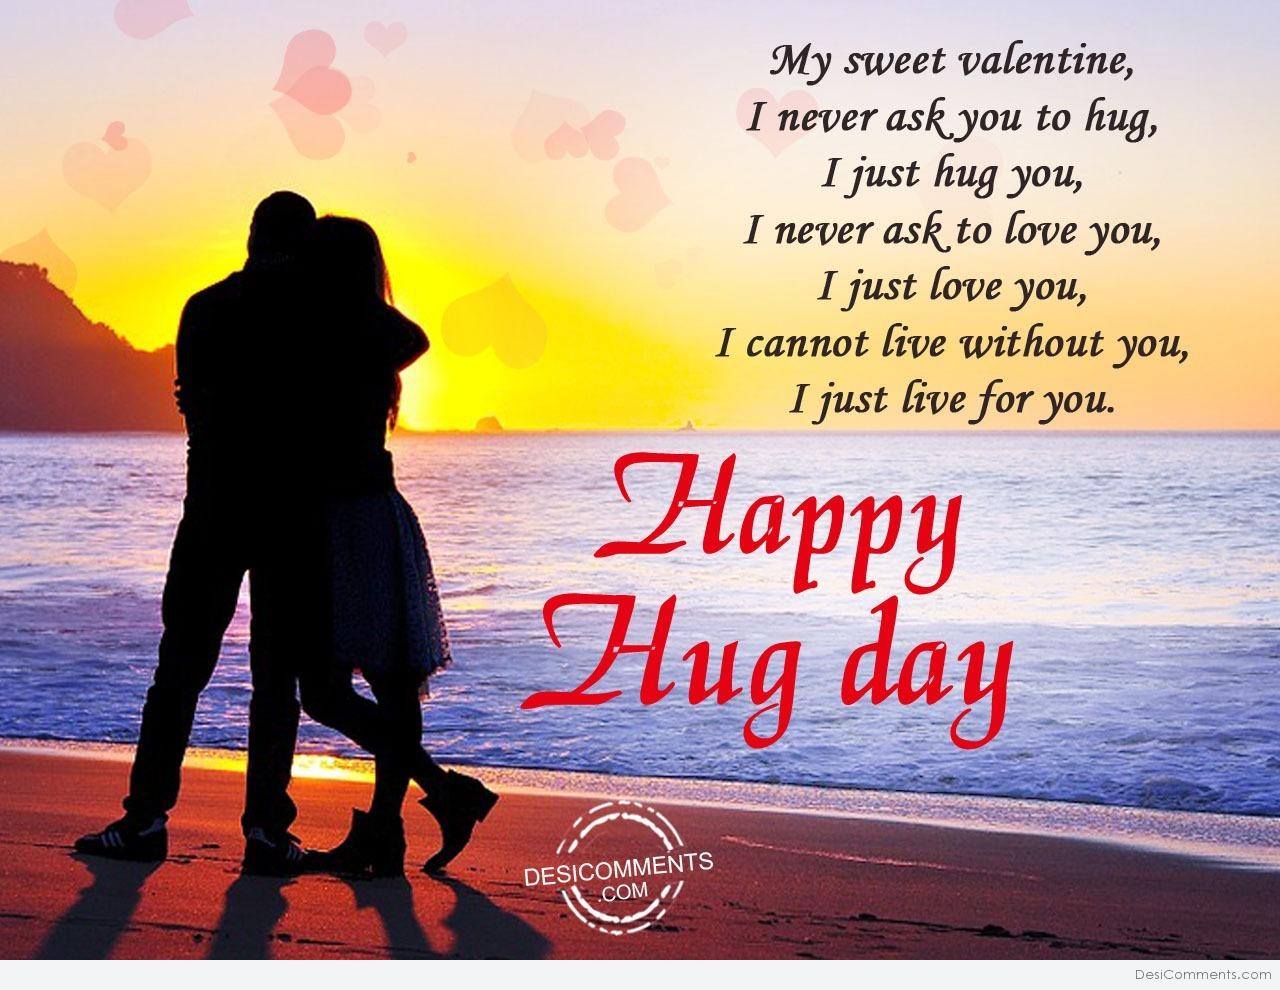 My sweet valentine, Happy hug day - DesiComments.com